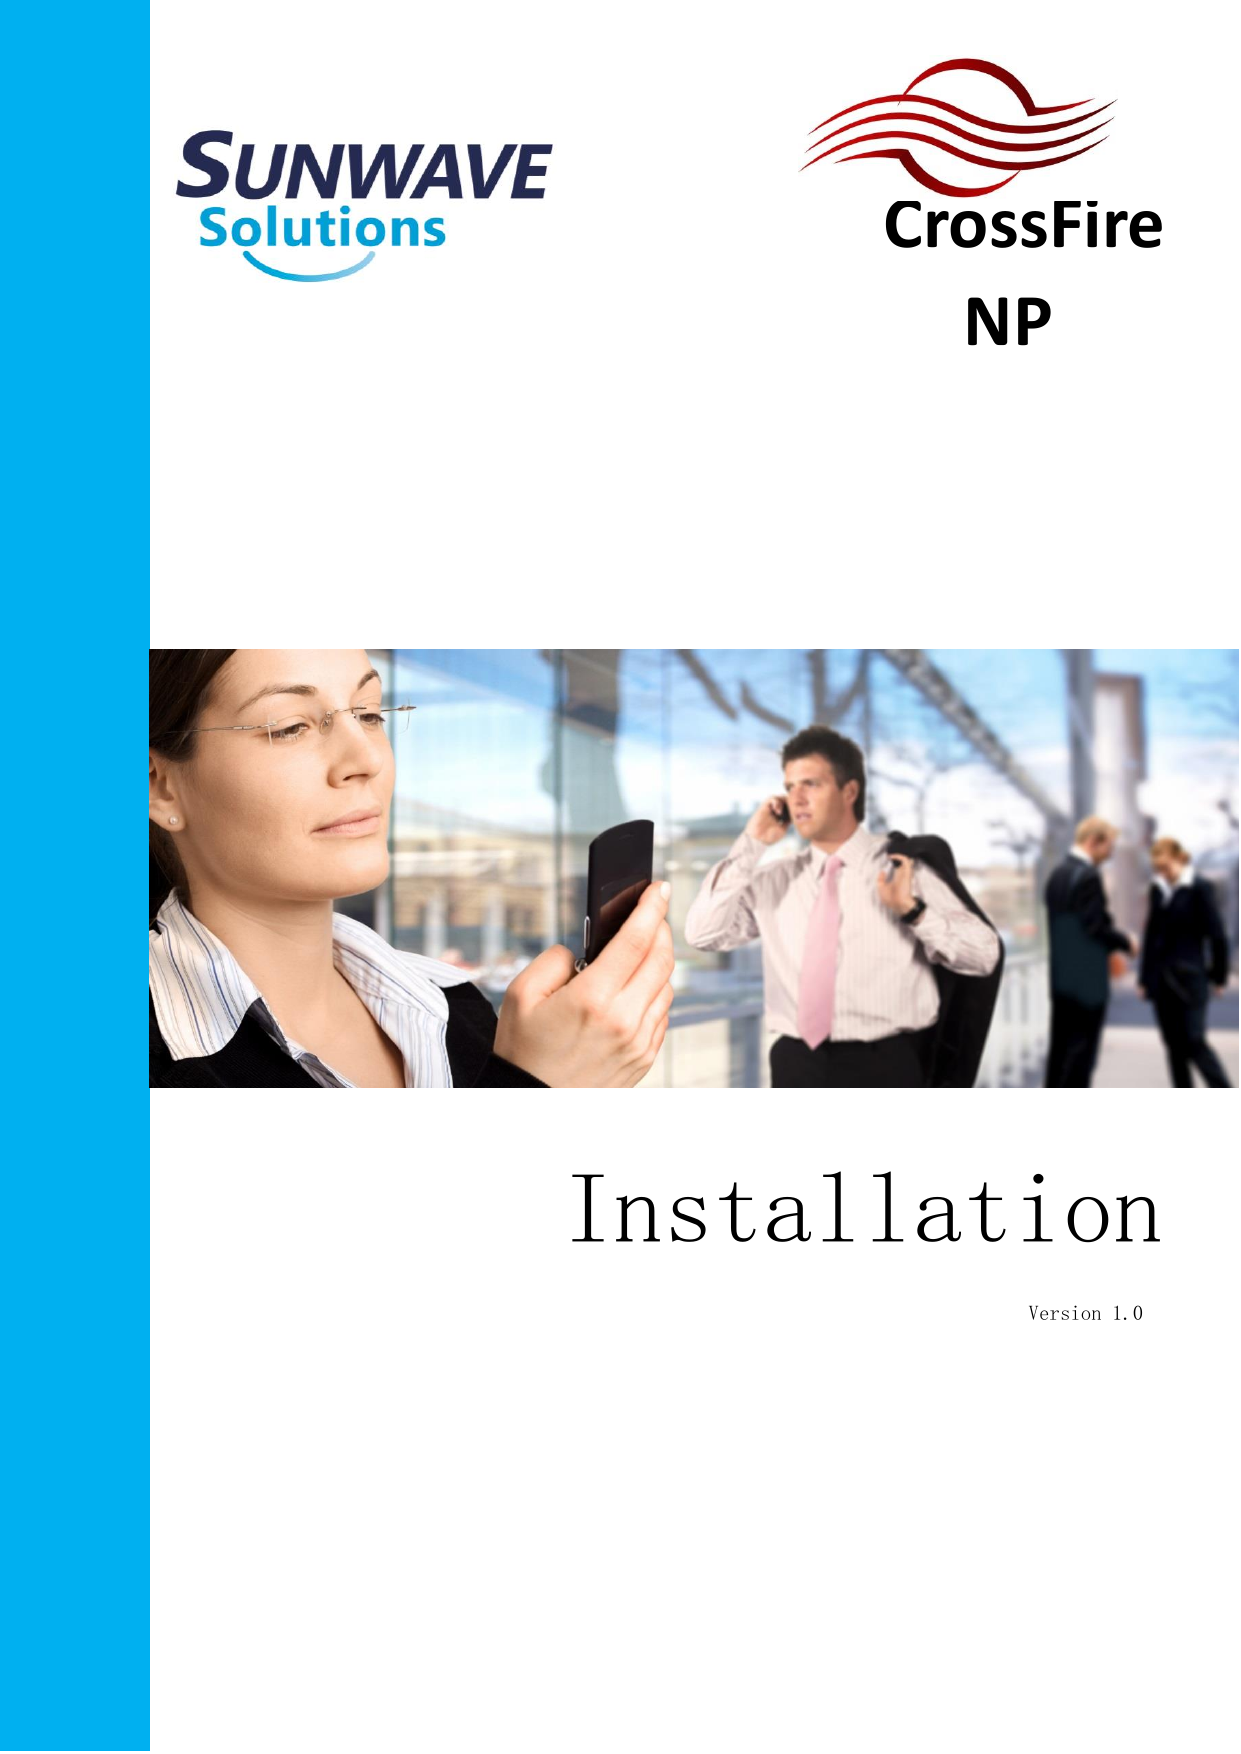                                                                                    CrossFire   NP                                                            Installation Version 1.0  